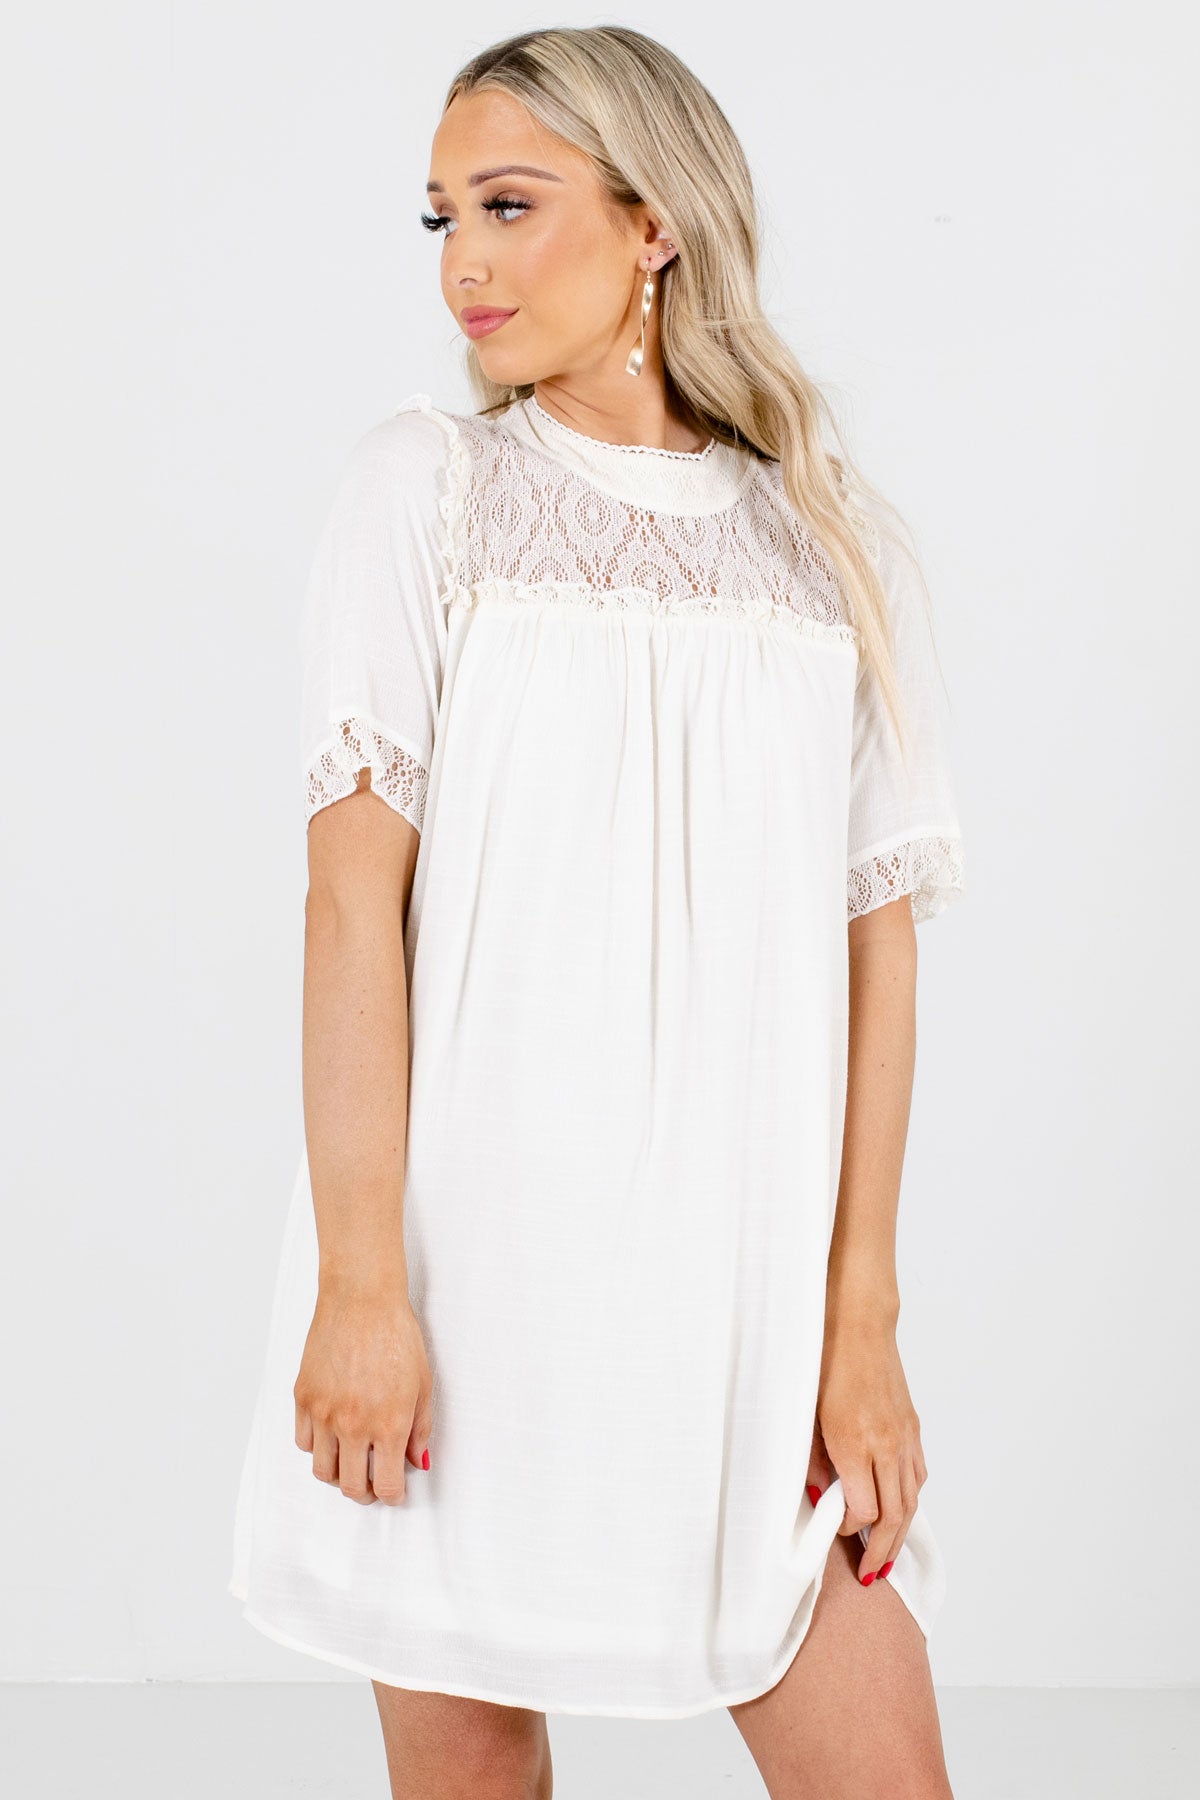 Women's Cream High-Quality Material Boutique Mini Dress